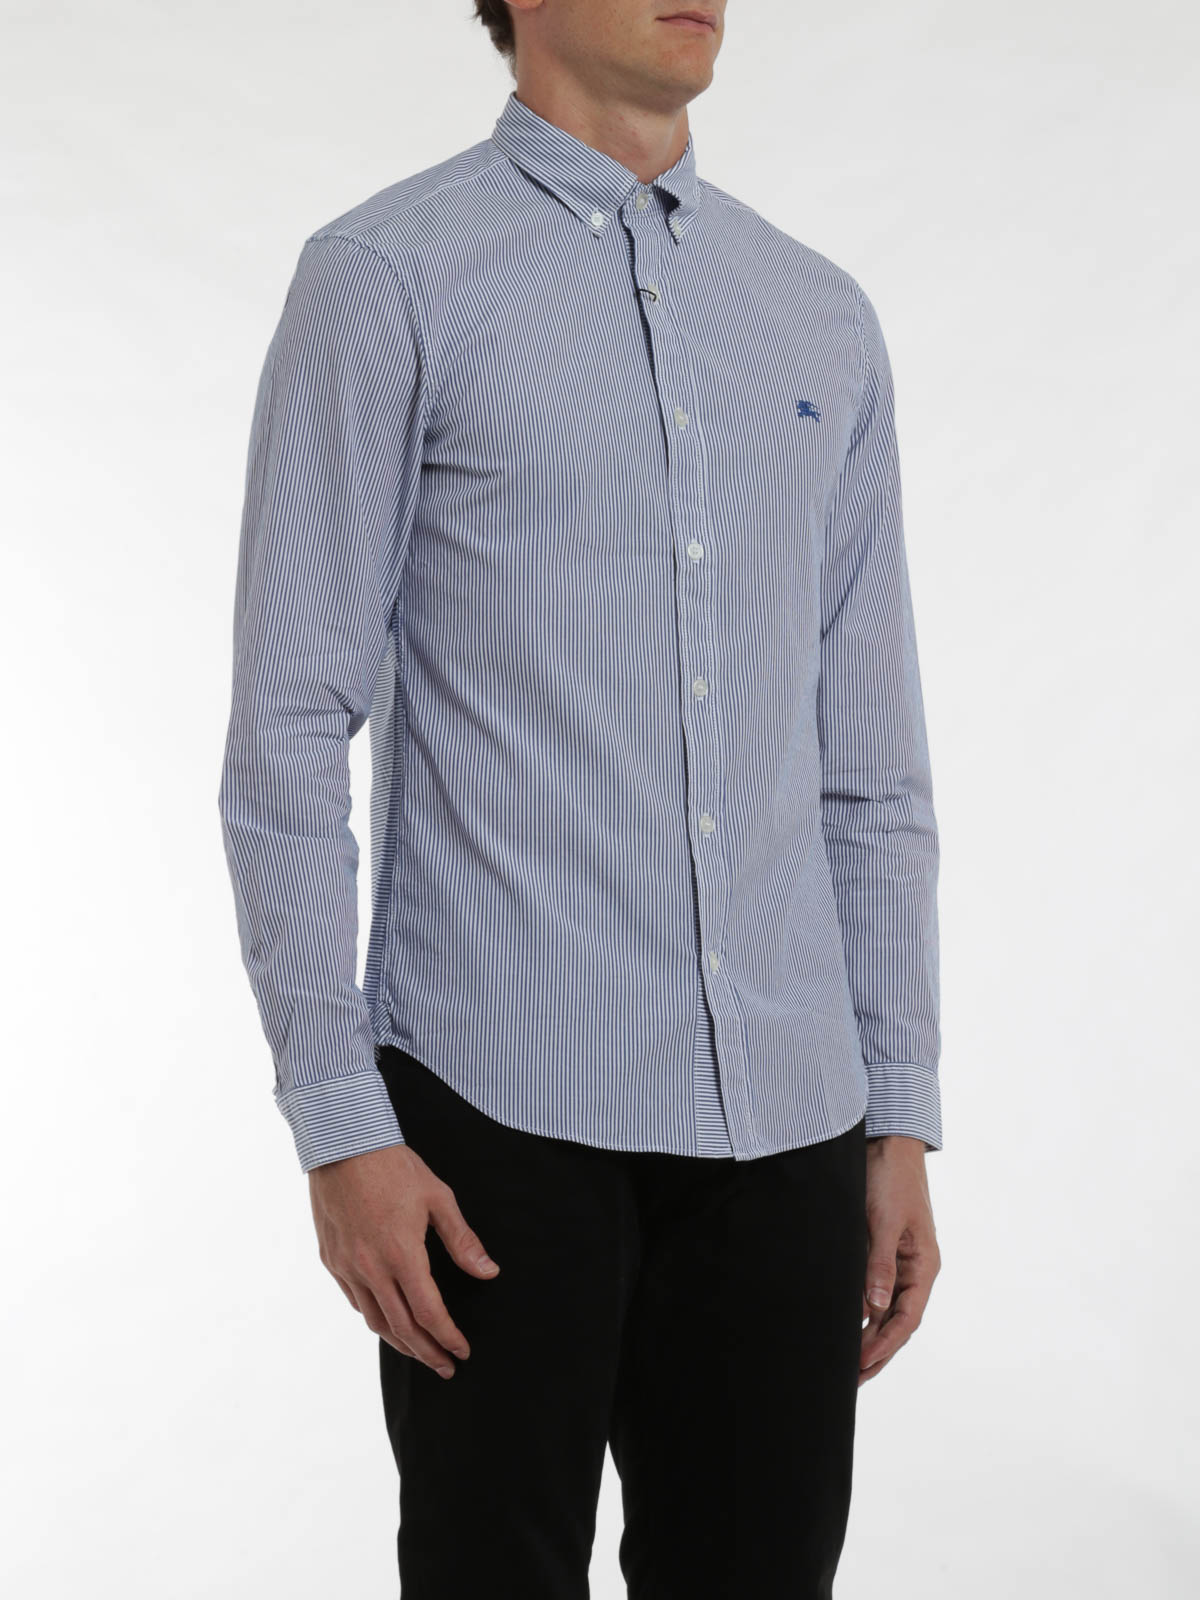 het doel Paine Gillic Mount Bank Shirts Buttero - Striped cotton shirt - 3983519ELLAND4080S | iKRIX.com